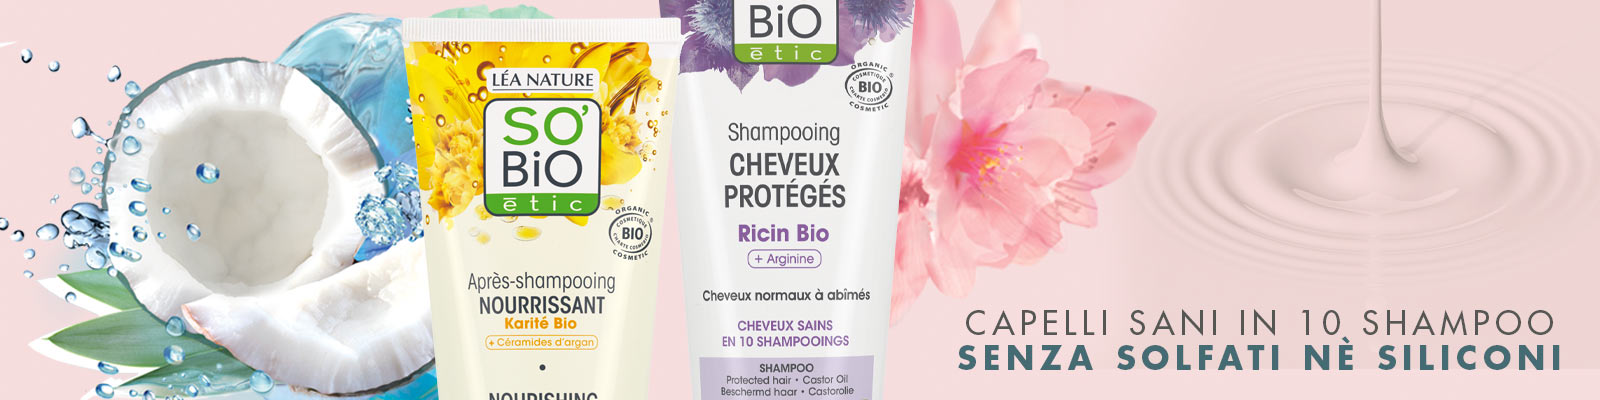 Shampoo biologici So'Bio étic - Formulazioni senza solfati, efficaci e delicate.